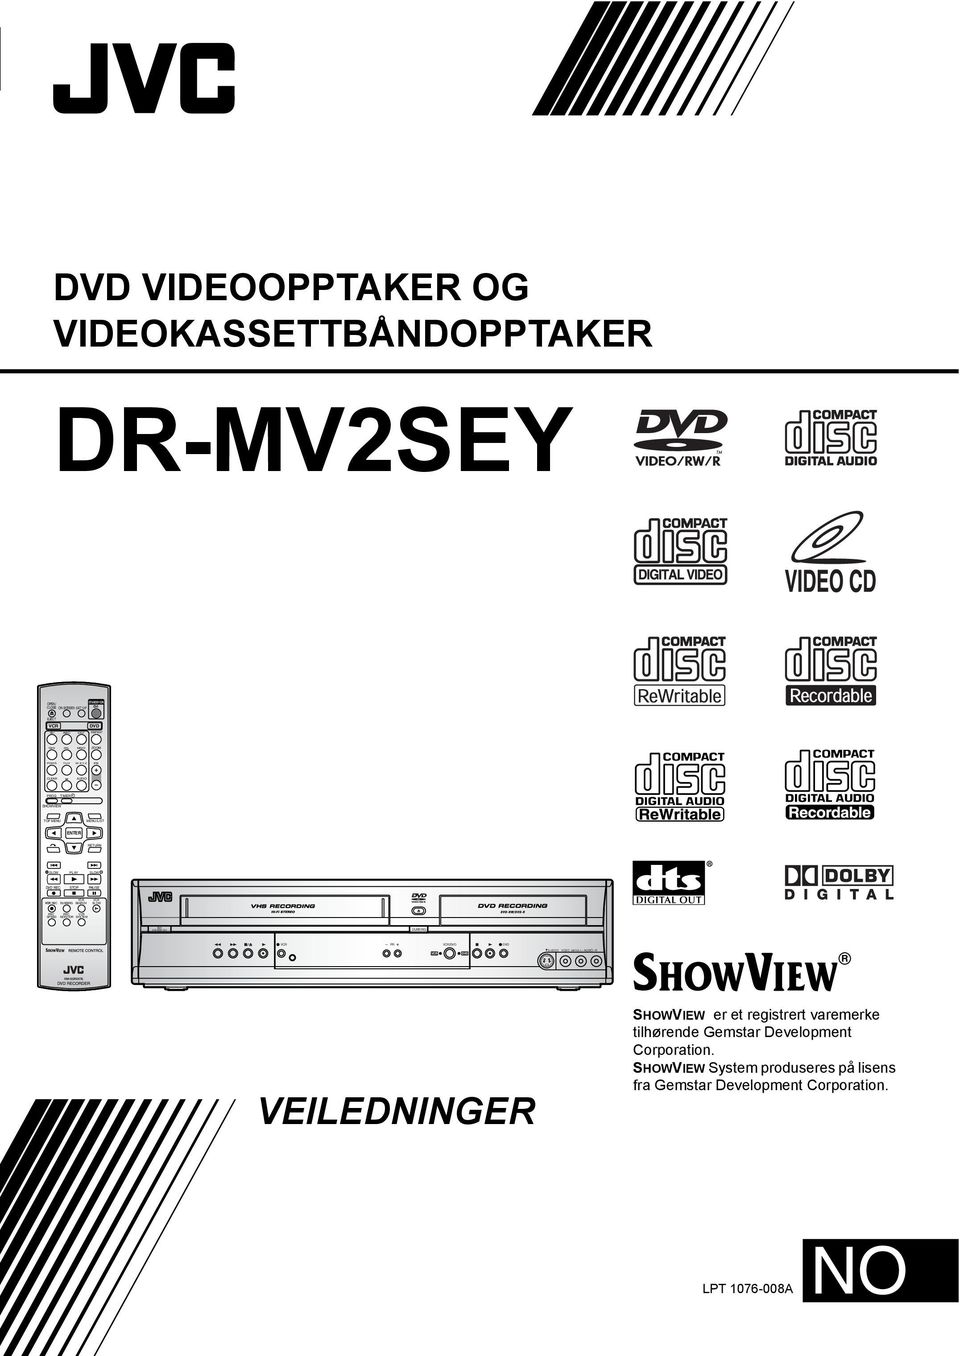 DUBBING SEARCH SLOW REC SPEED REC MONITOR VCR SYSTEM DUBBING VCR PR VCR/ VCR S-VIDEO VIDEO (MO) L-AUDIO-R R VEILEDNINGER SHOWVIEW er et